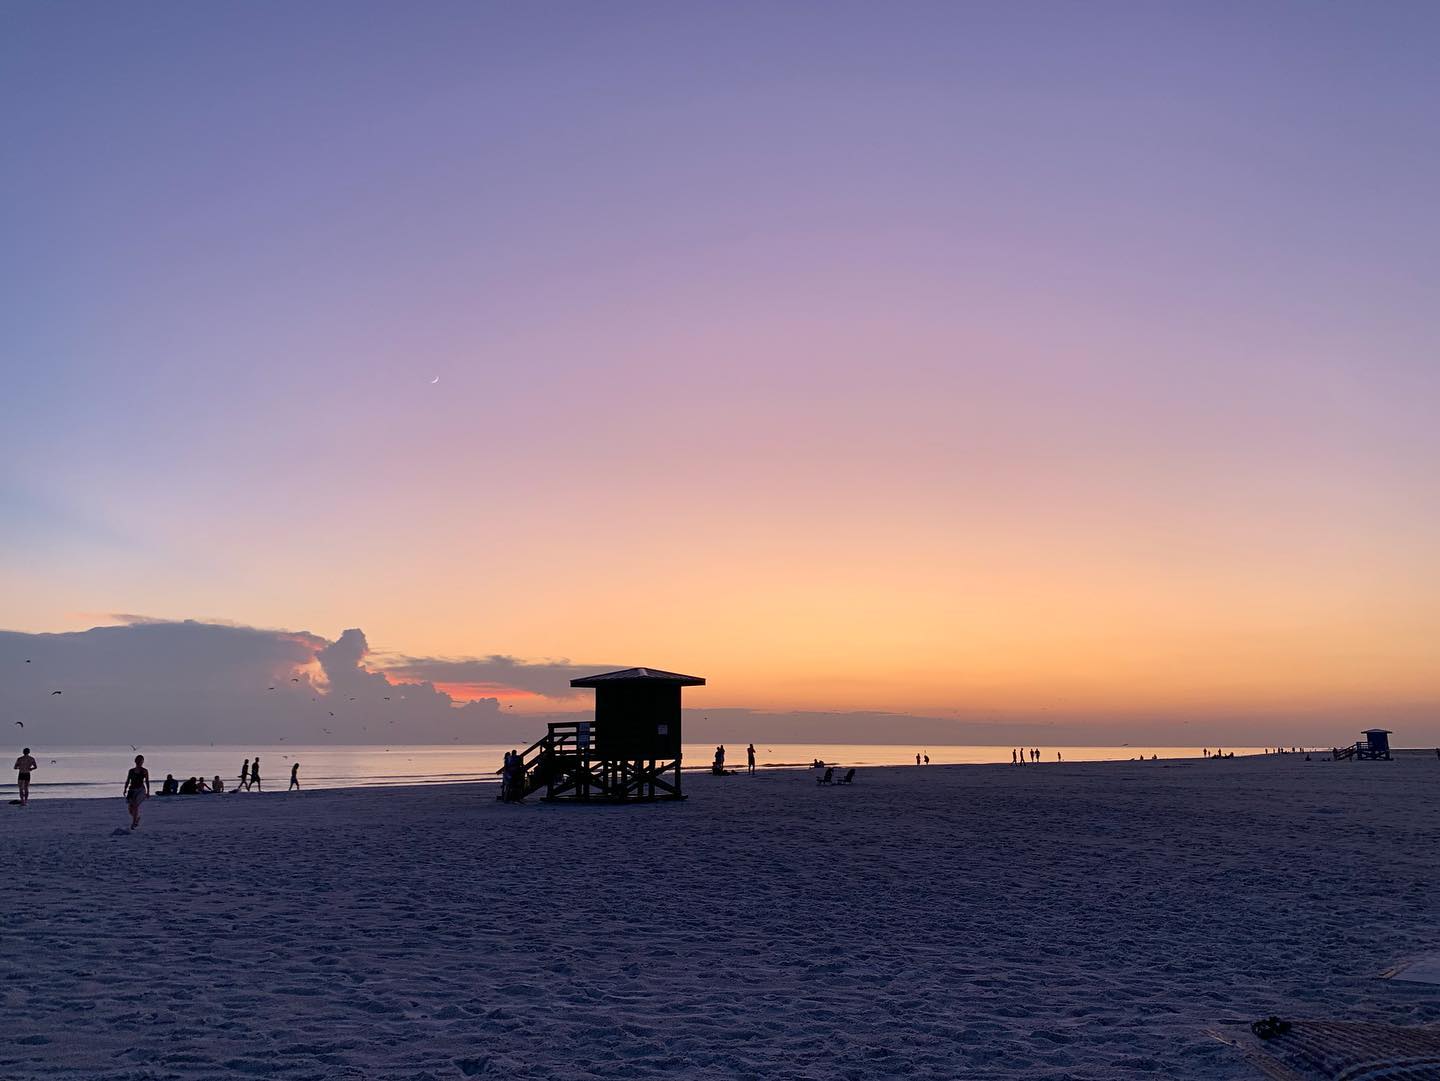 Clearwater Beach sunset, FL